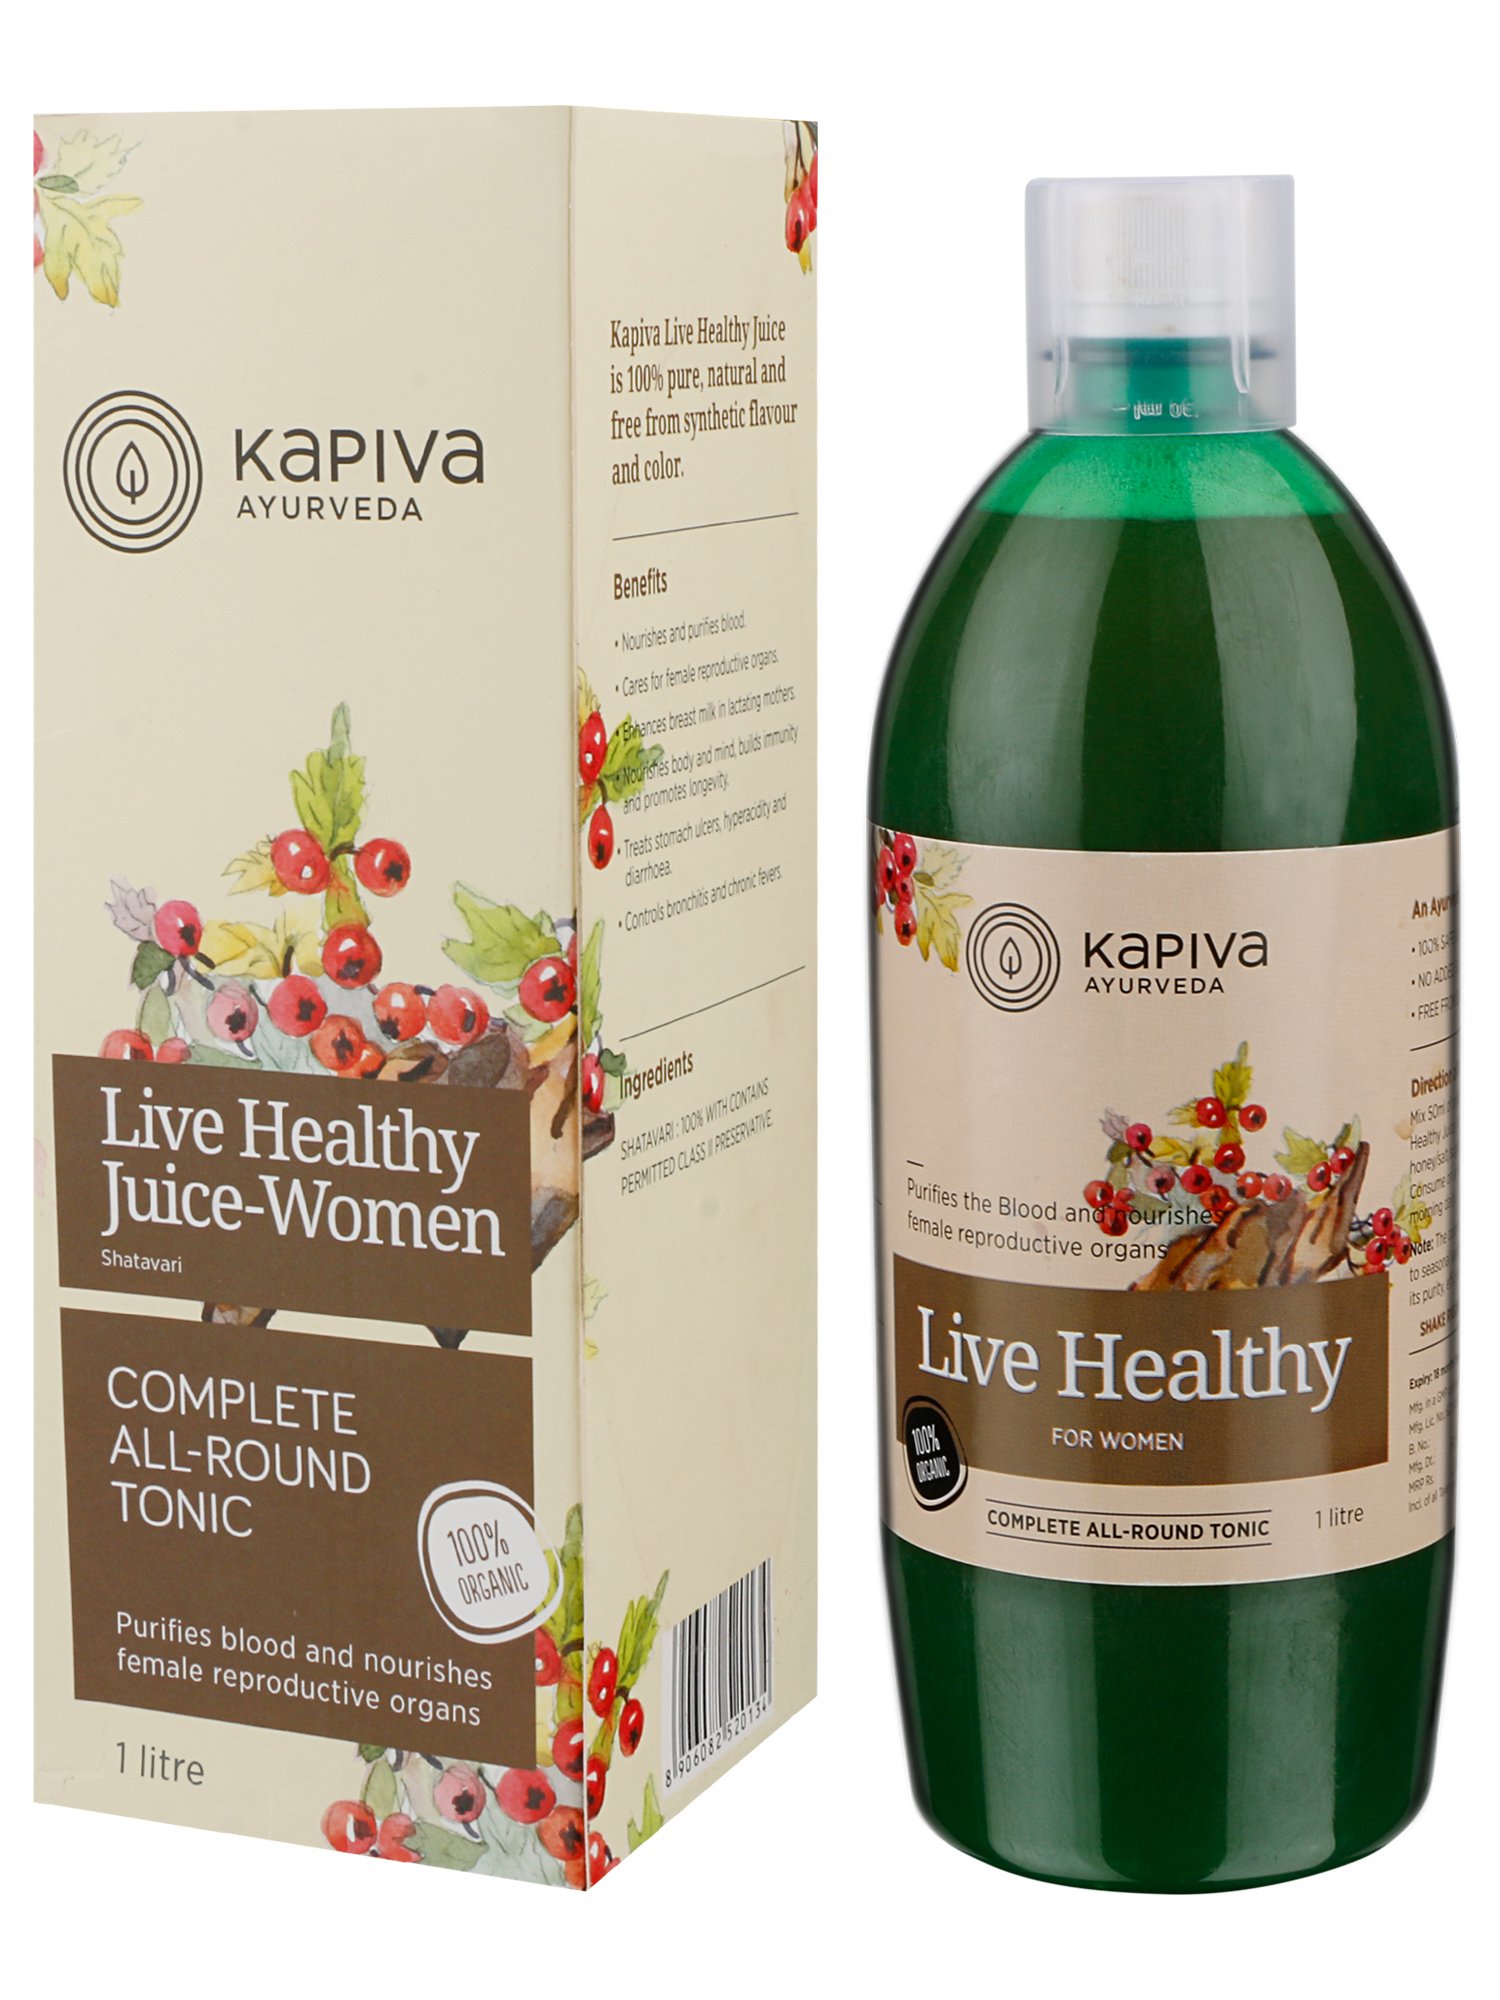 Buy Kapiva Live Healthy Women Juice at Best Price Online